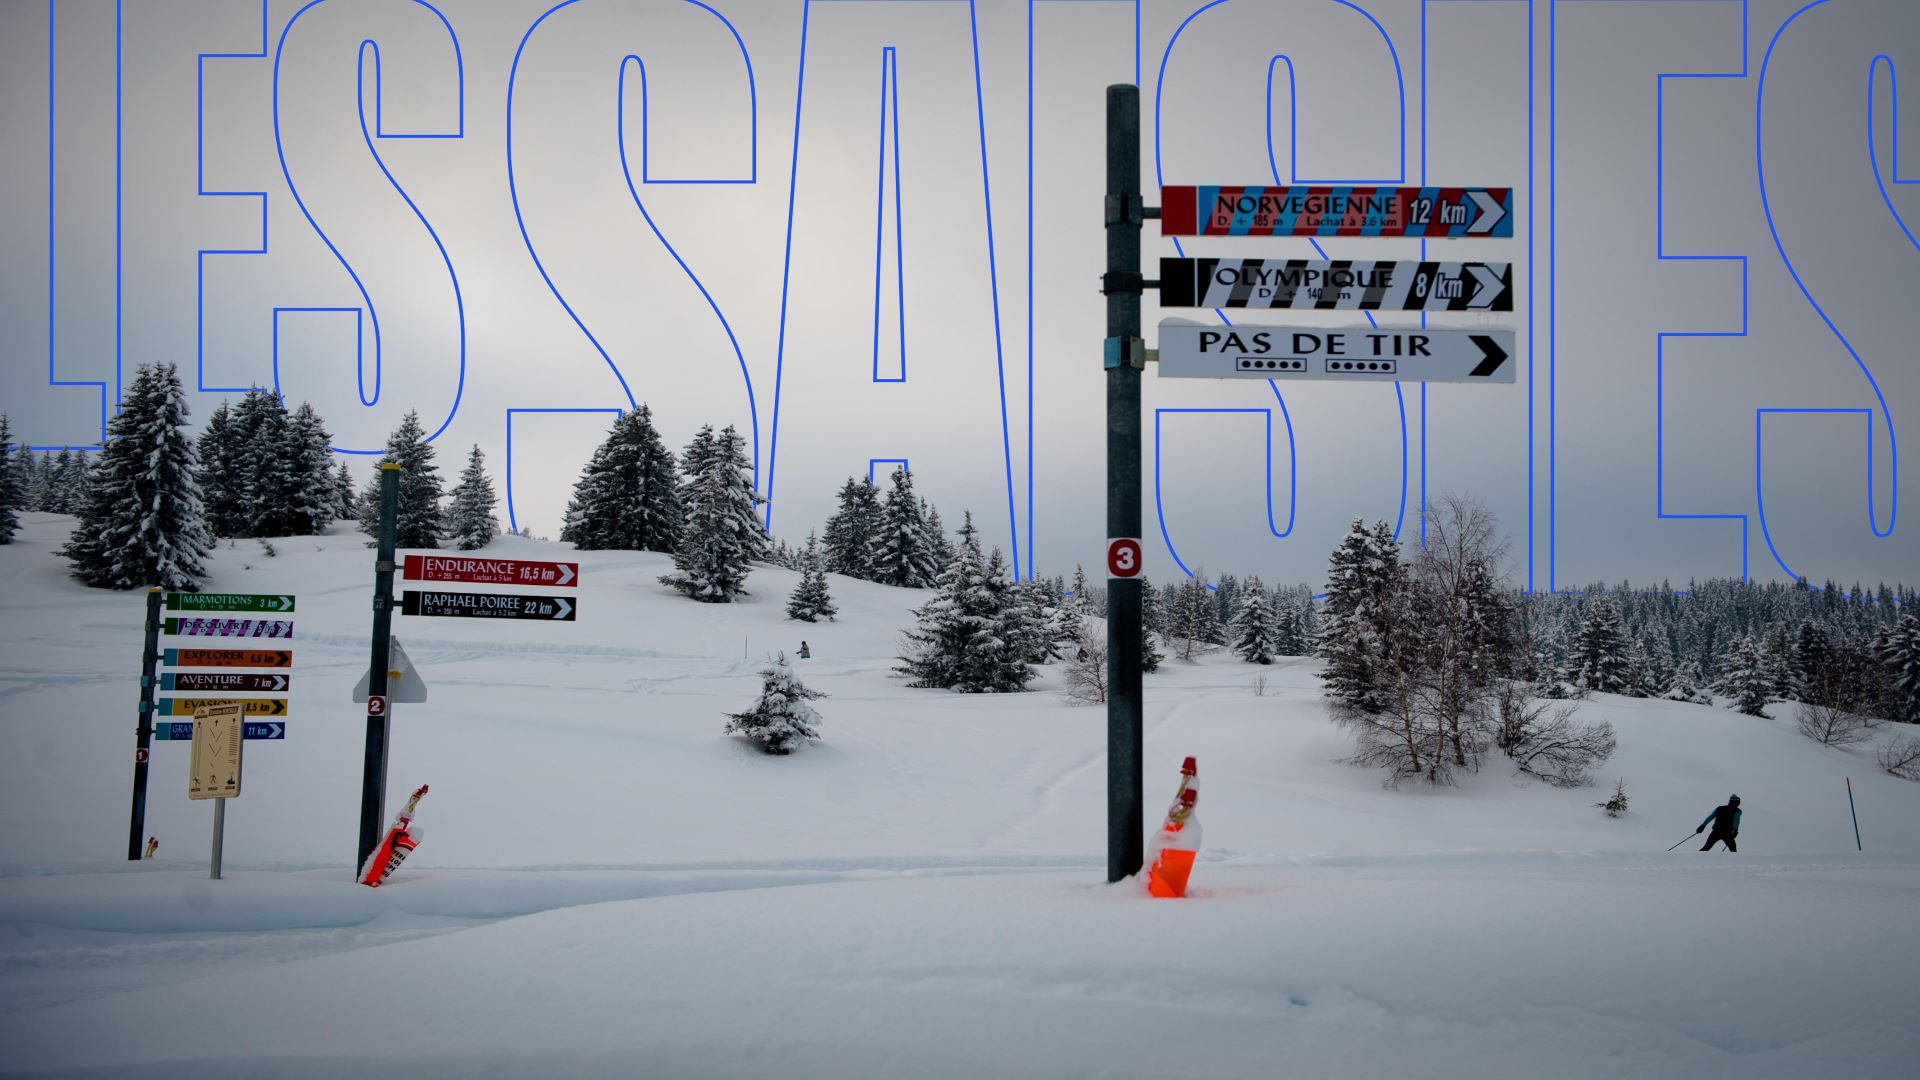 Les Saisies pistes de ski de fond